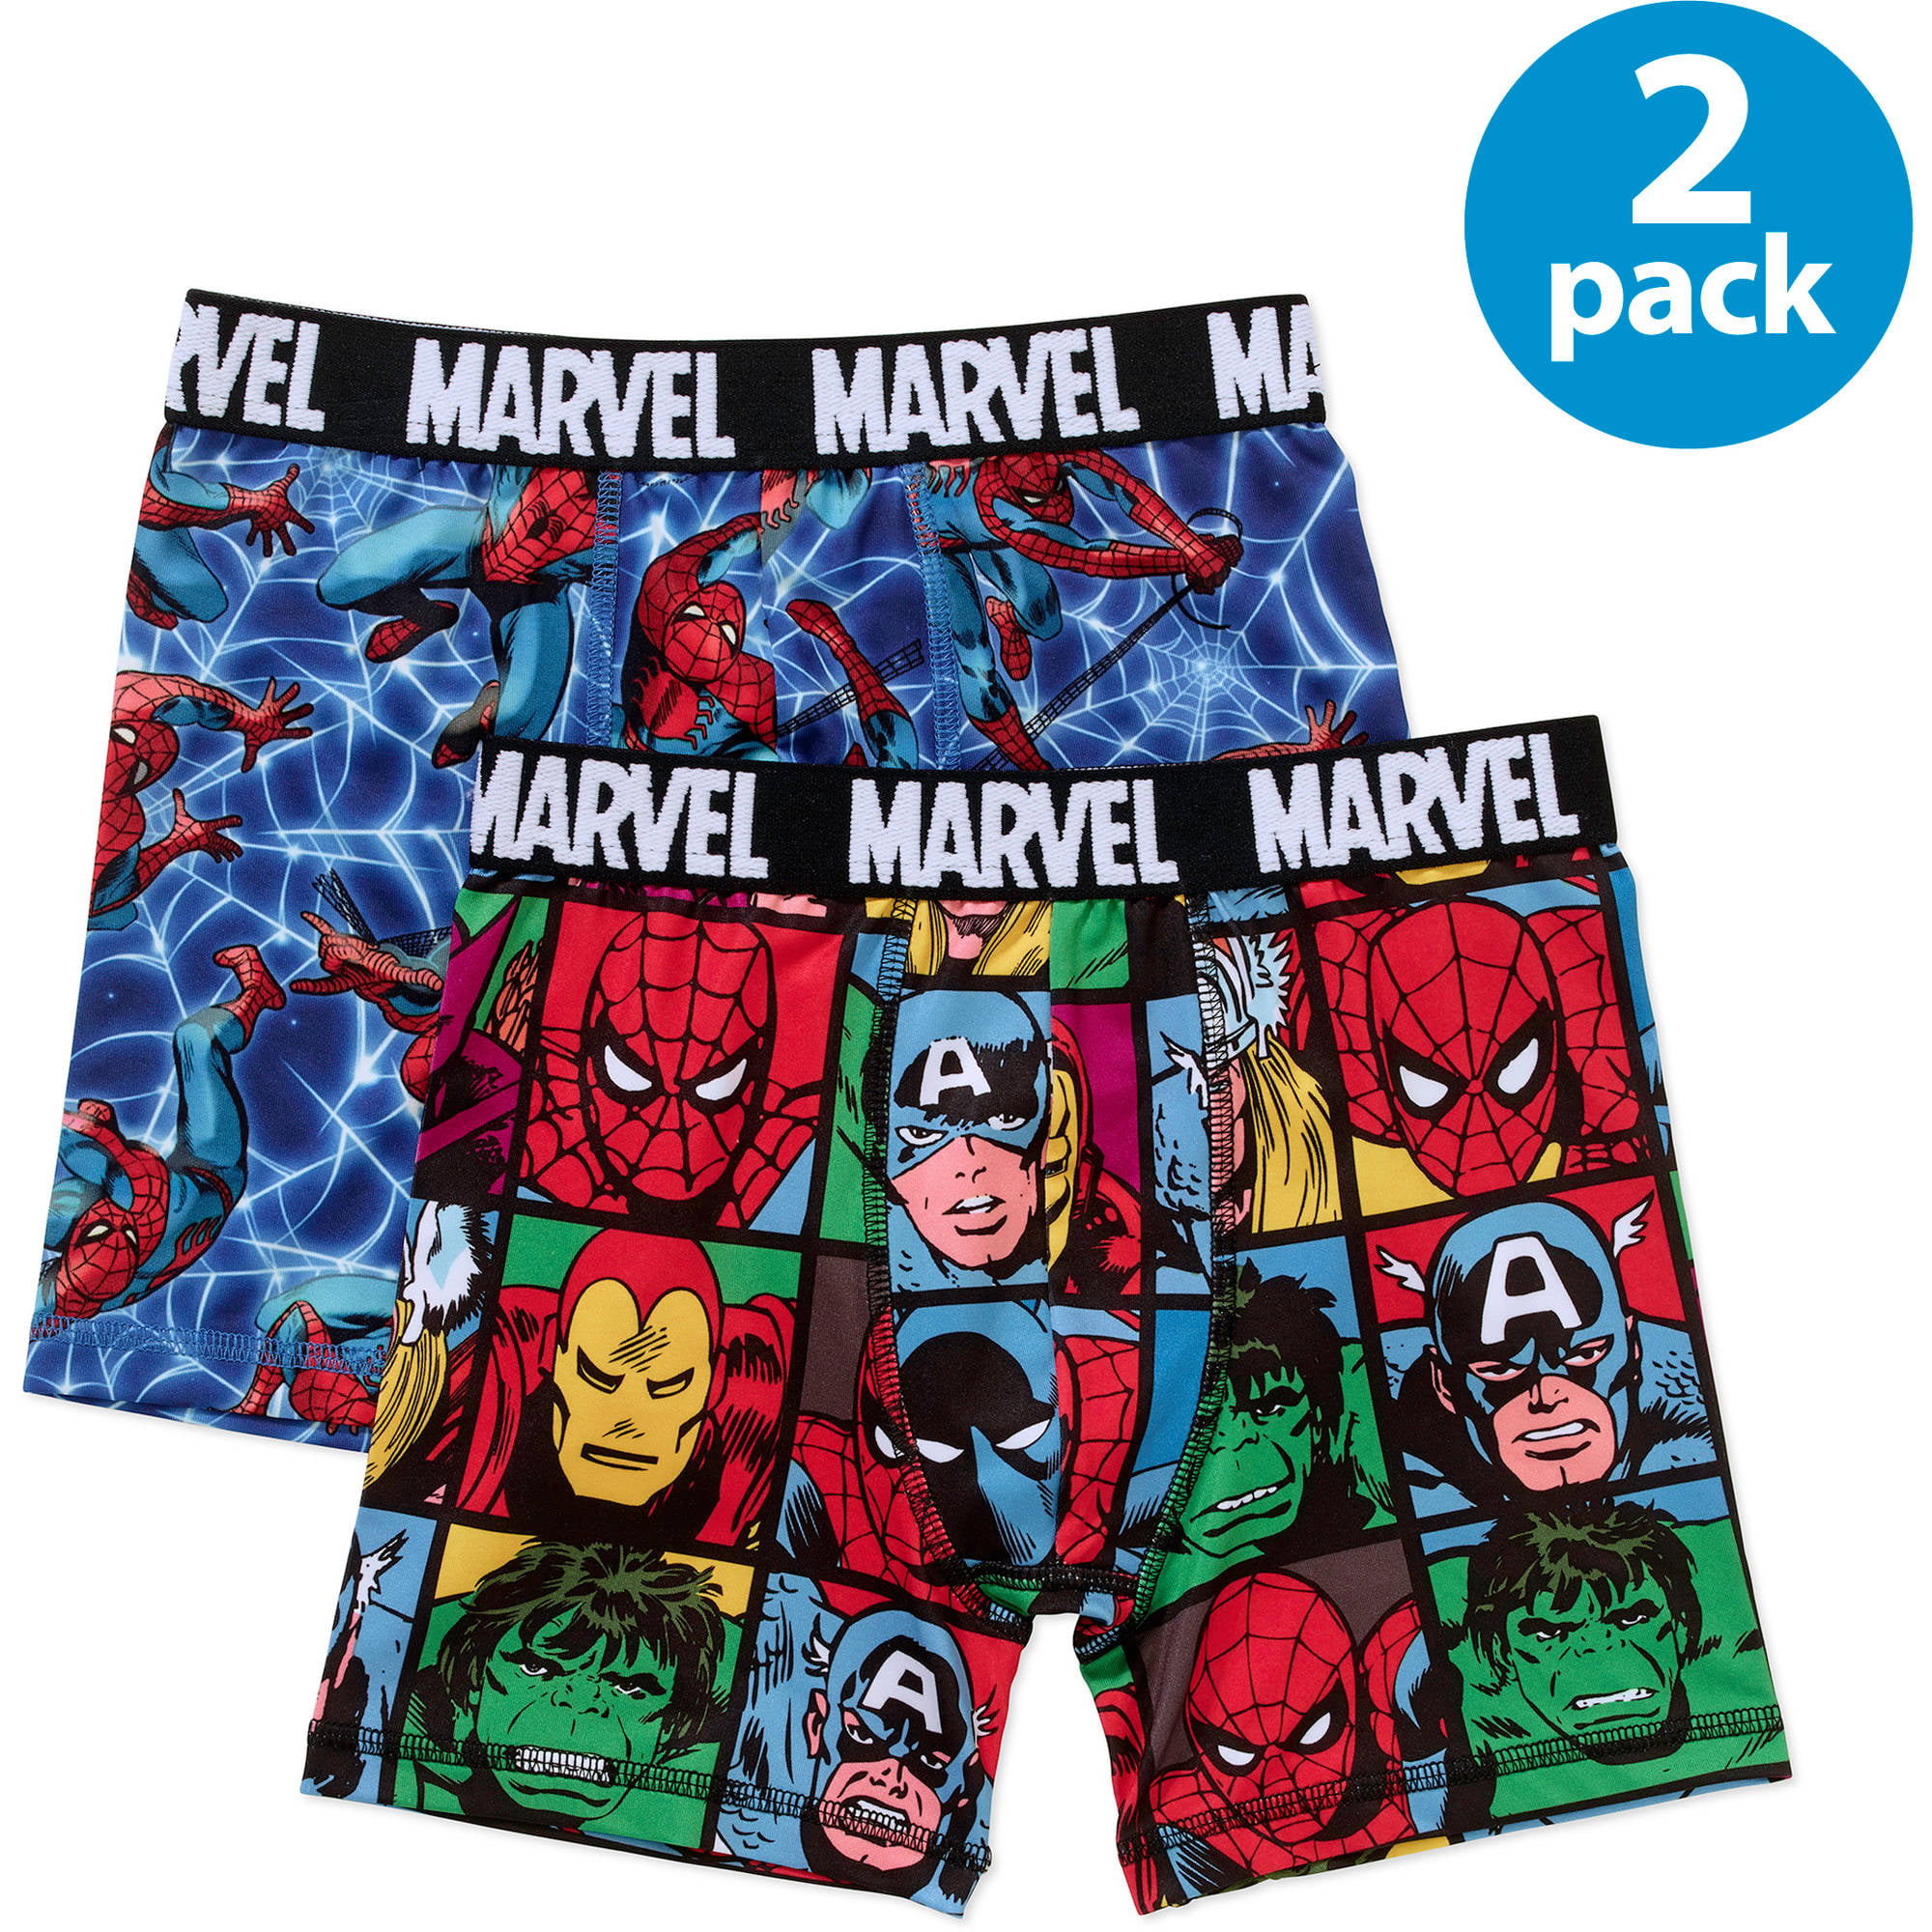 Boys Boxer Shorts Marvel Spiderman Avengers Space Jam Paw Patrol Underwear  2pack